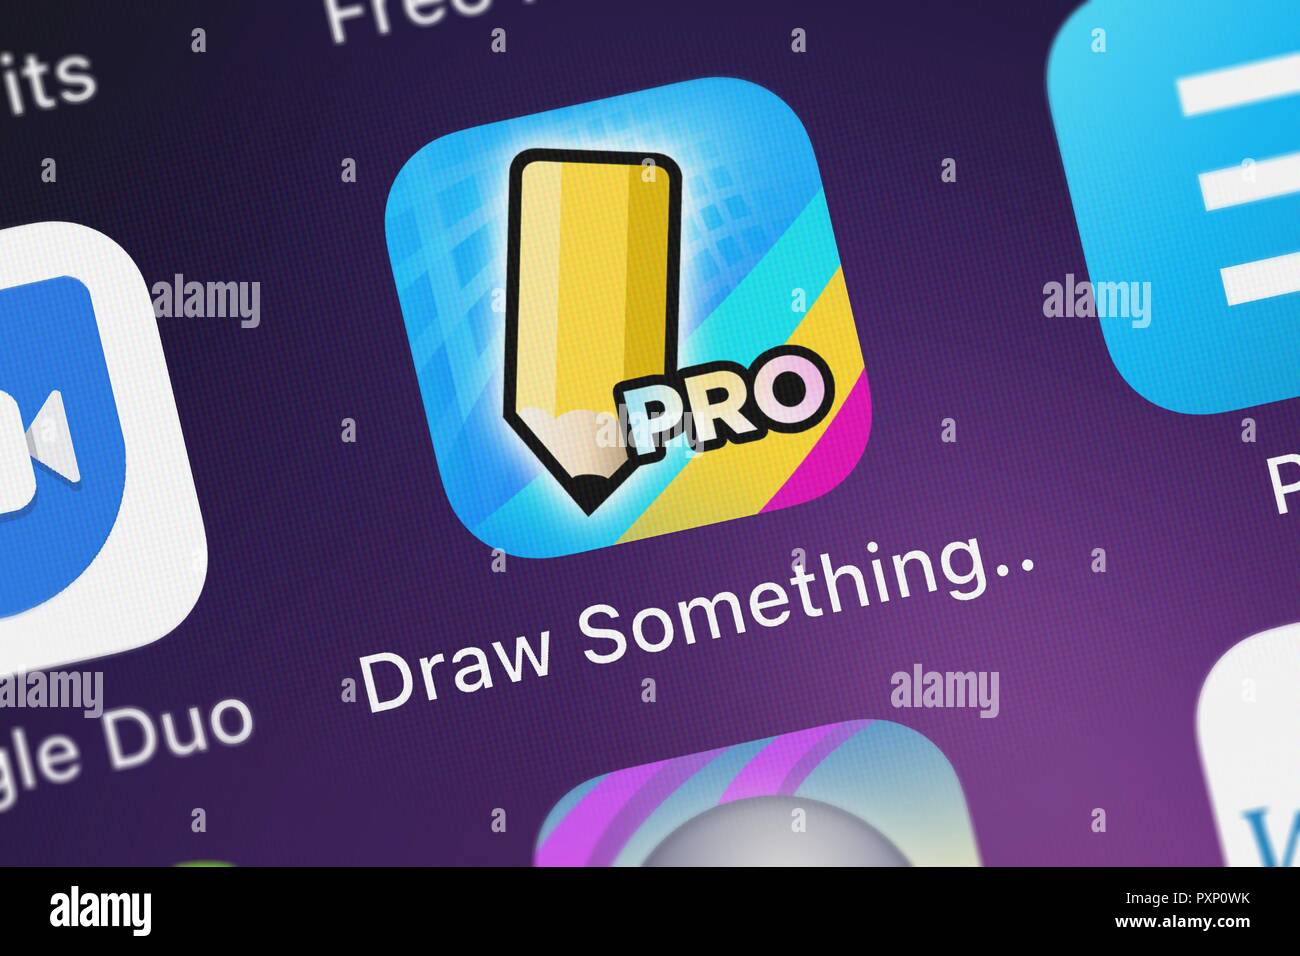 draw something app logo